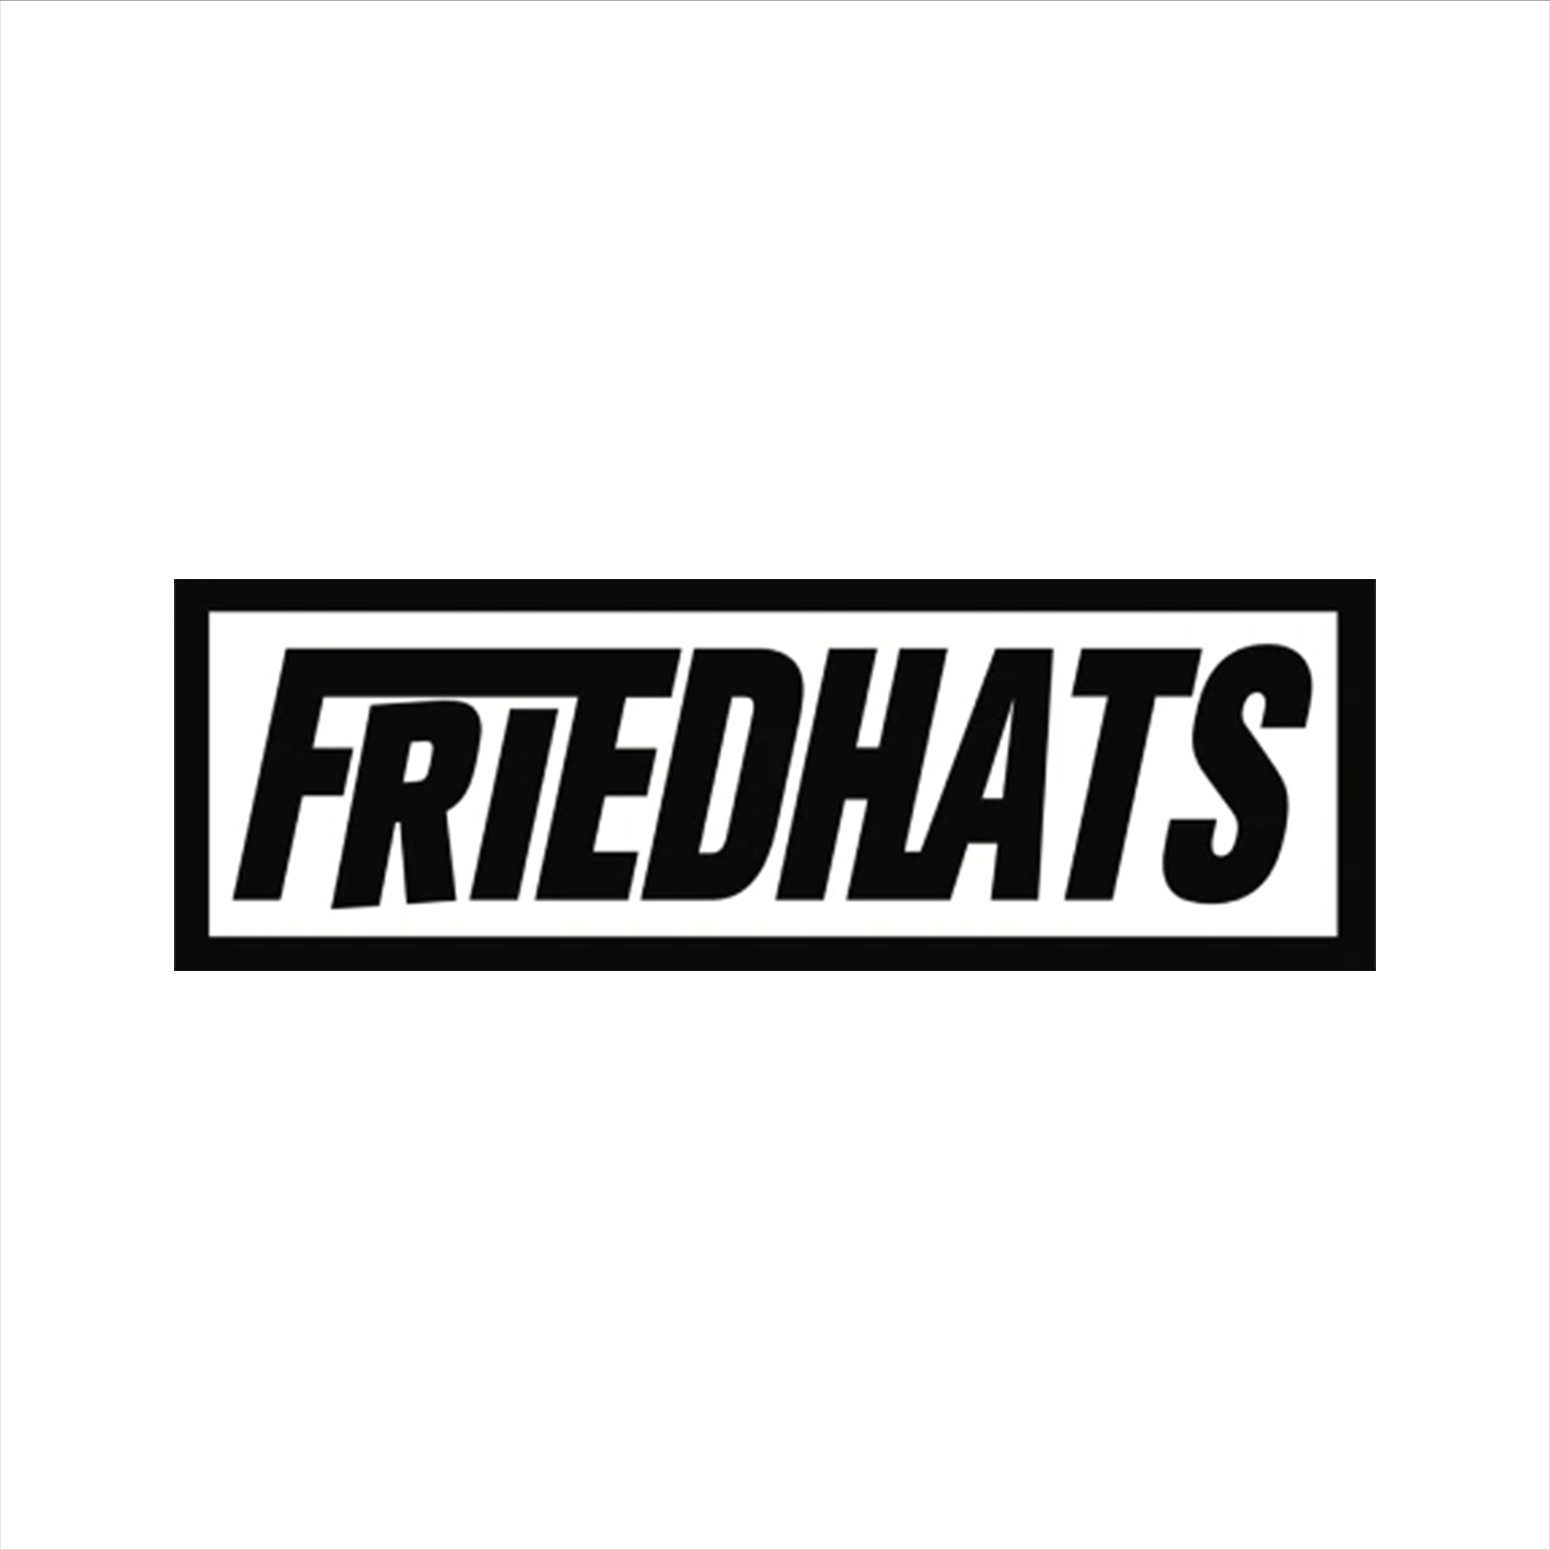 Friedhats